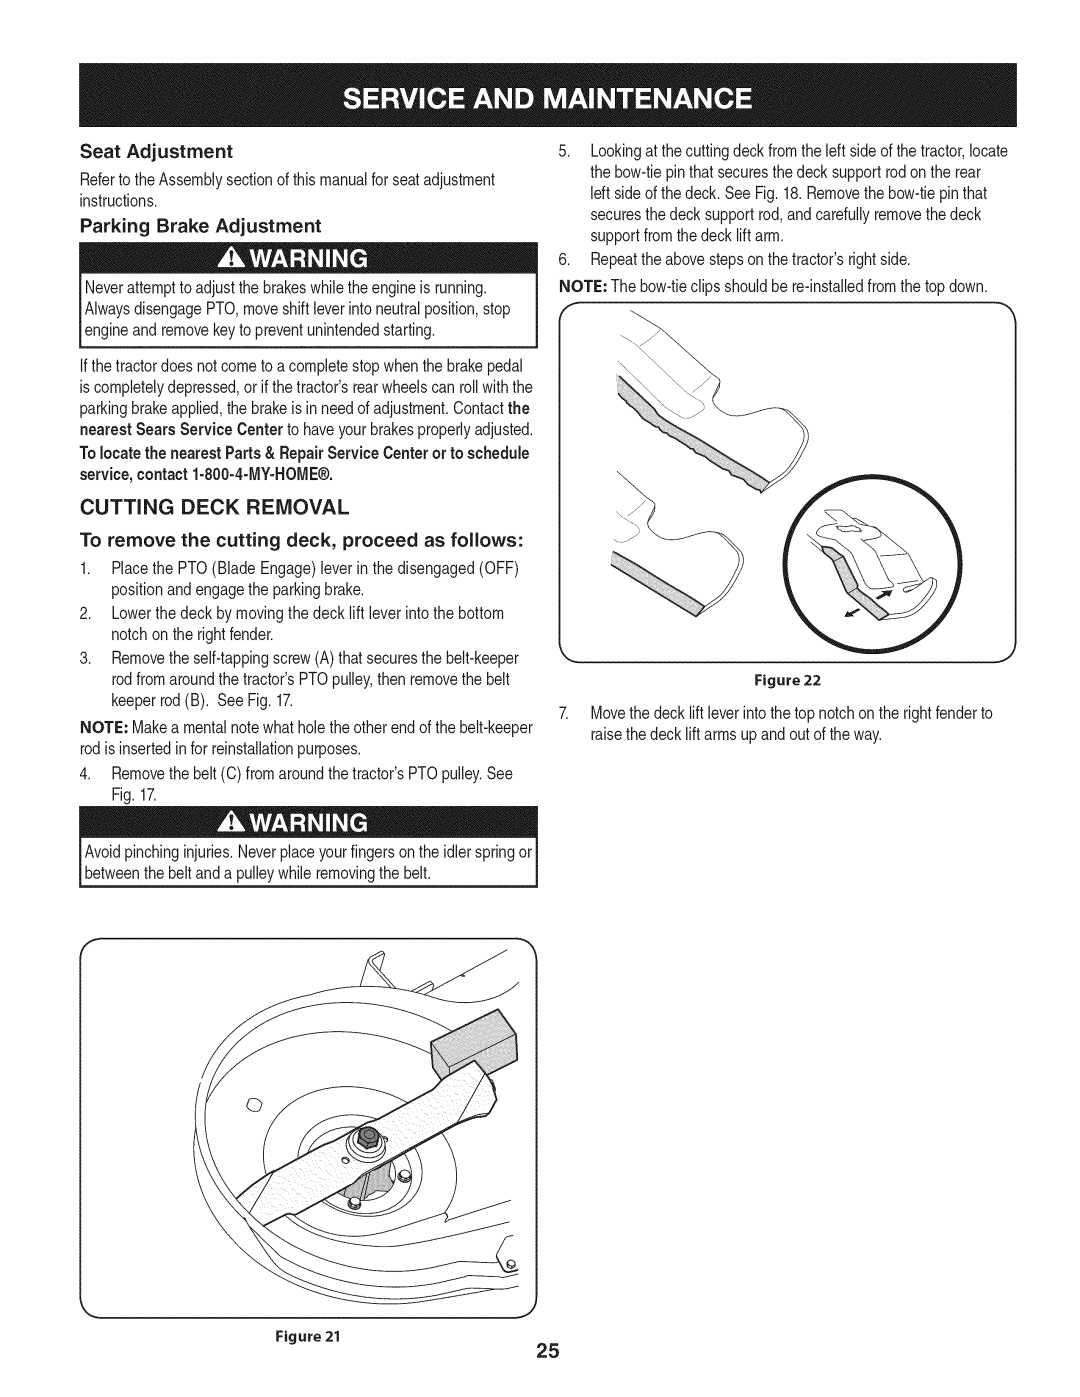 Craftsman 247.28902 manual Cutting Deck Removal, Seat Adjustment, Parking Brake Adjustment 